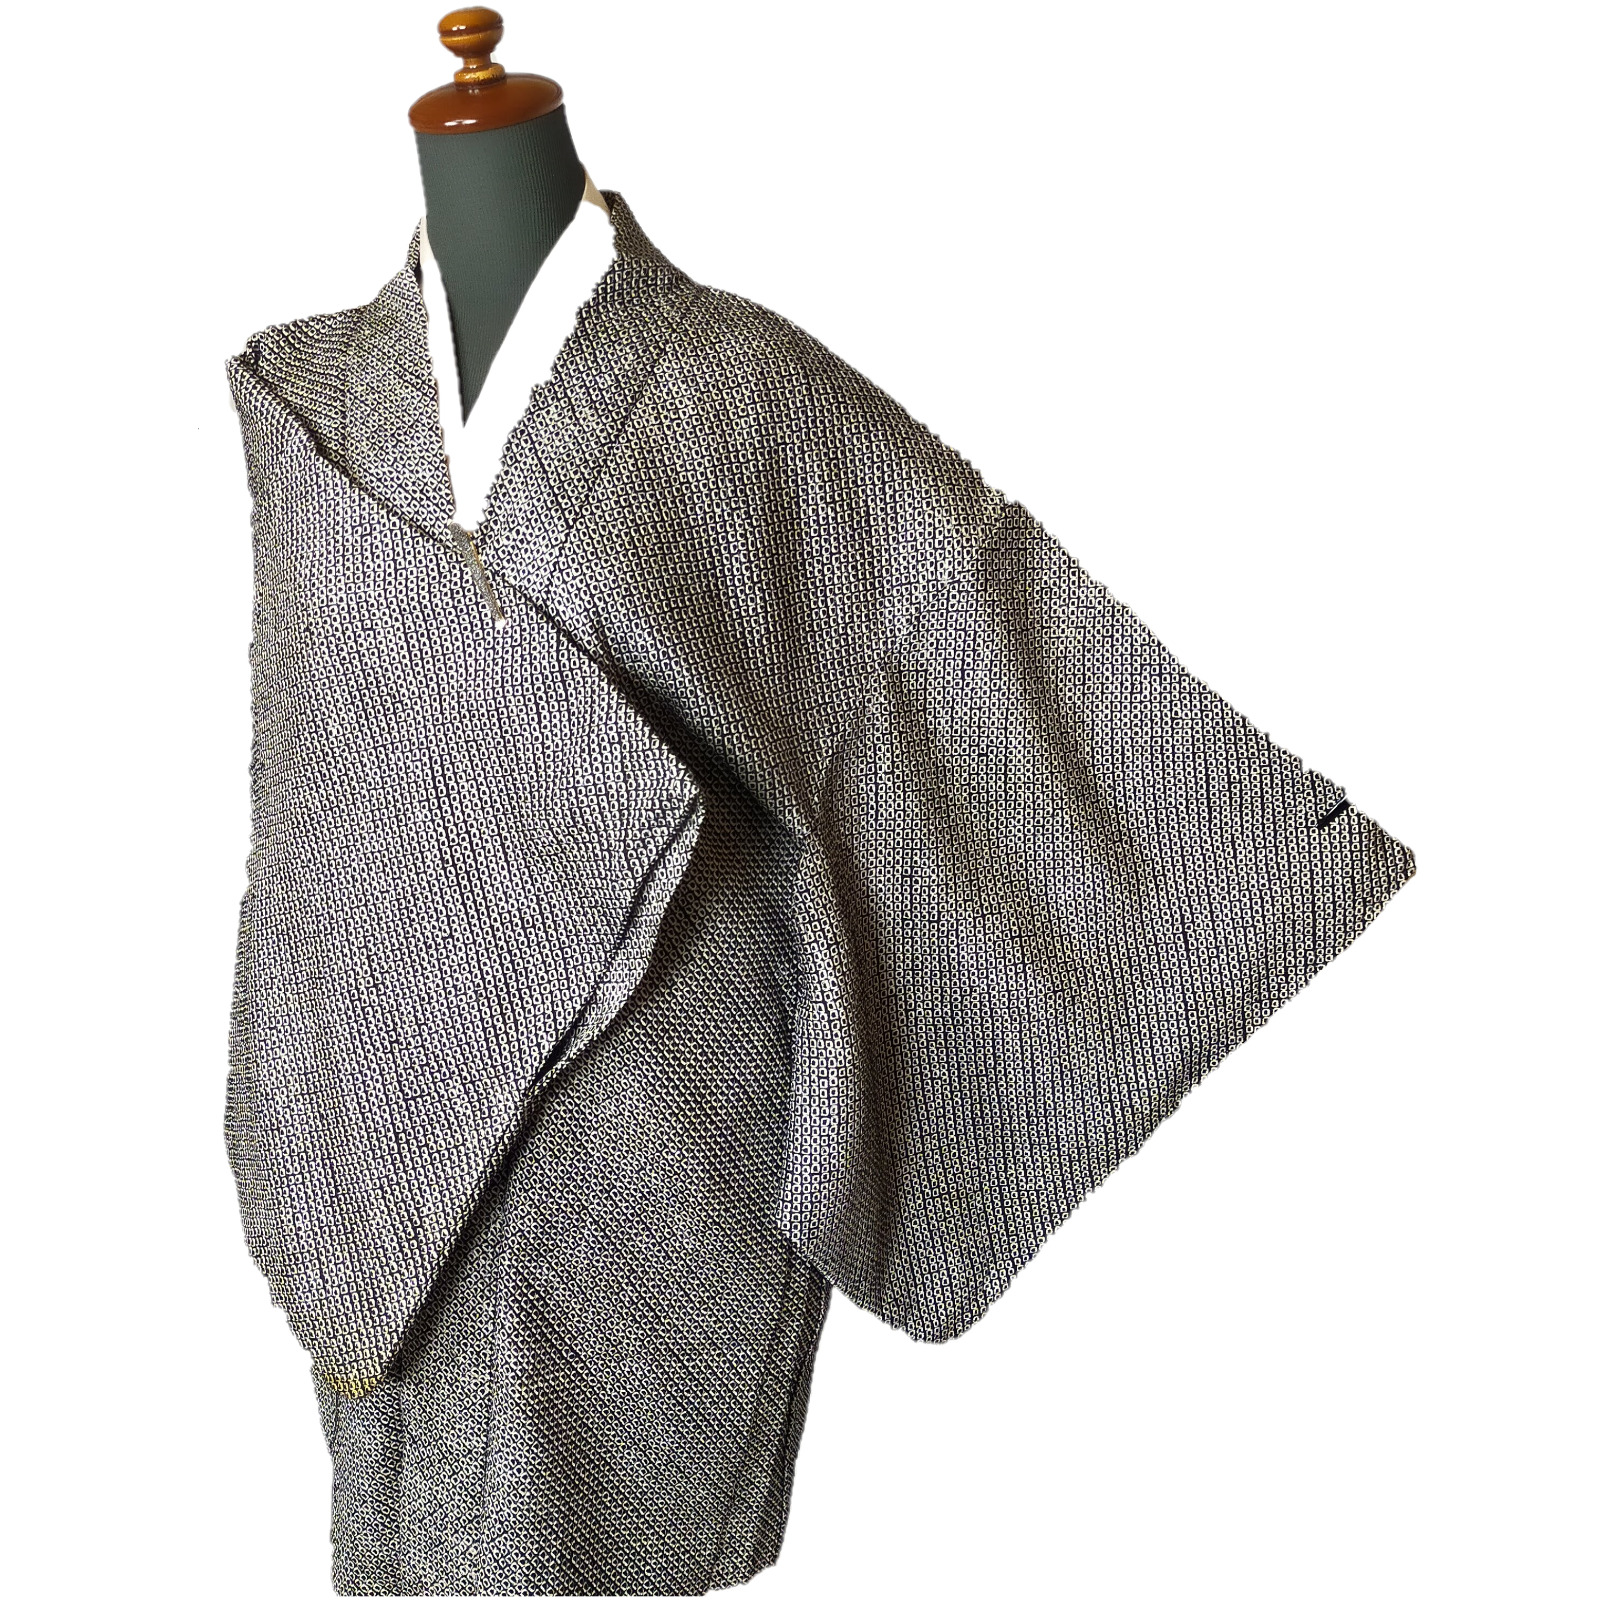 Vintage kimono Haori robe  Jacket Traditional Shibori pattern 9517